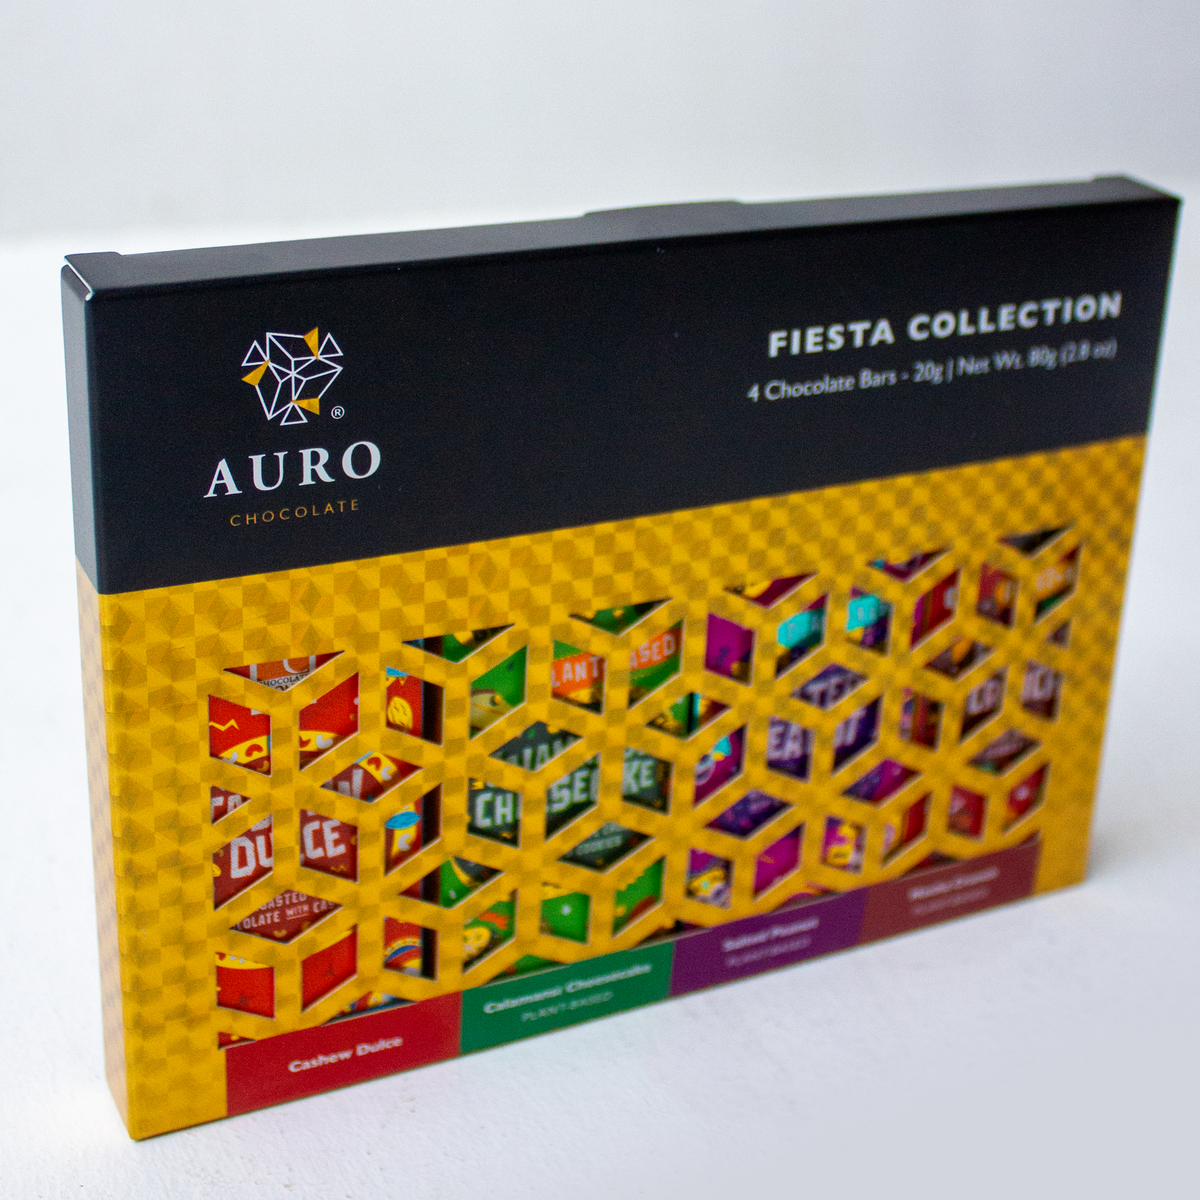 Auro Chocolate - Fiesta Collection